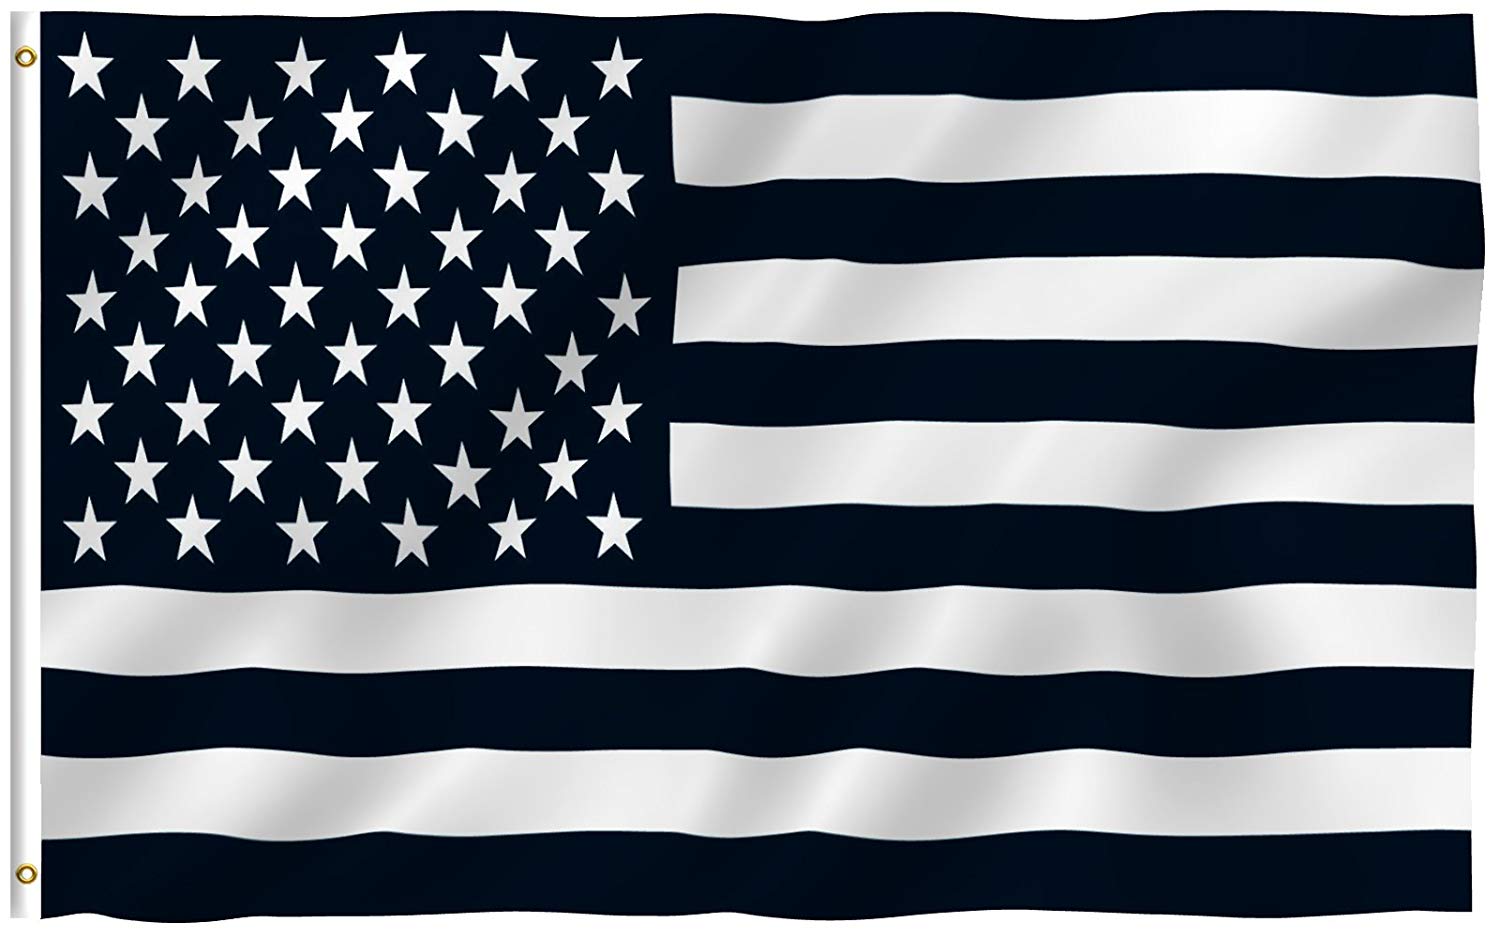 Black and White American Flag Logo - Amazon.com : 3'x5' BLACK and WHITE AMERICAN FLAG, military, nascar ...